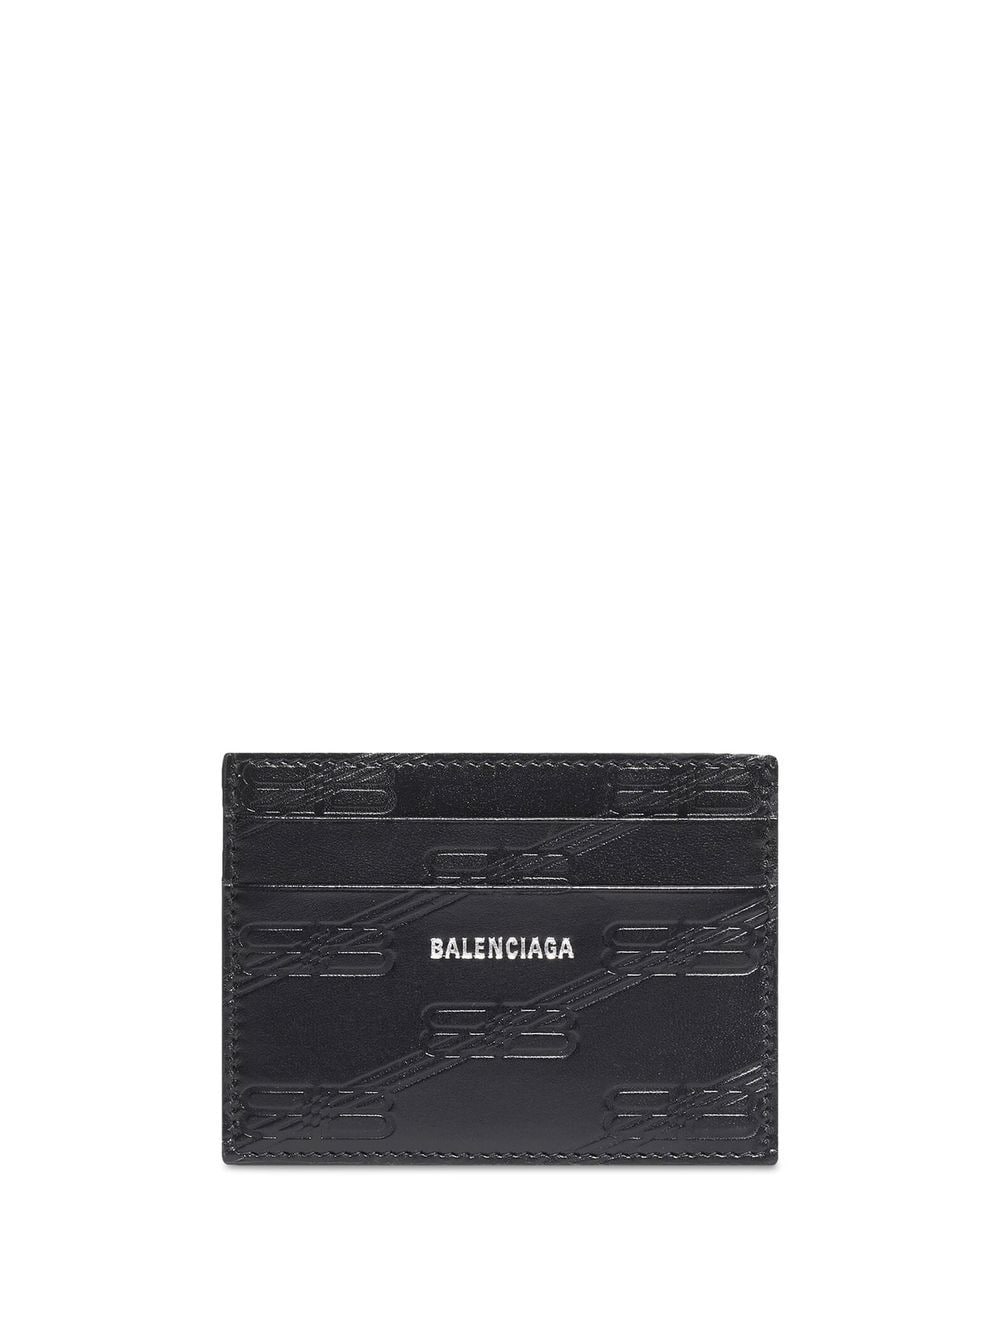 Balenciaga 经典logo压纹卡夹 In Black